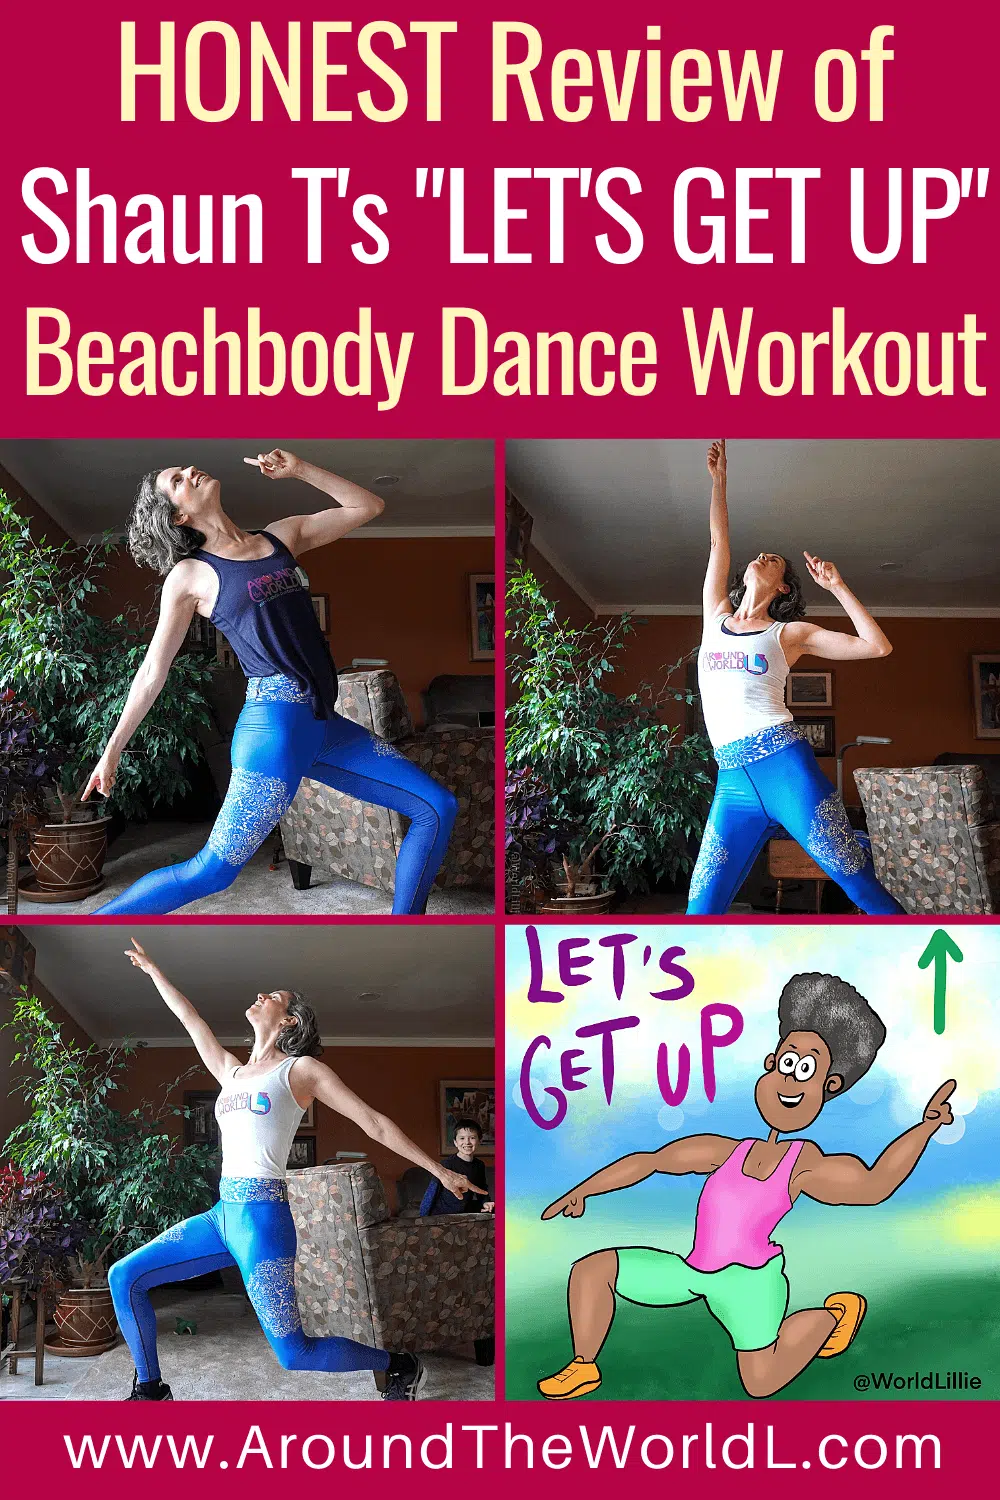 Beachbody dance workout "Let's Get Up"